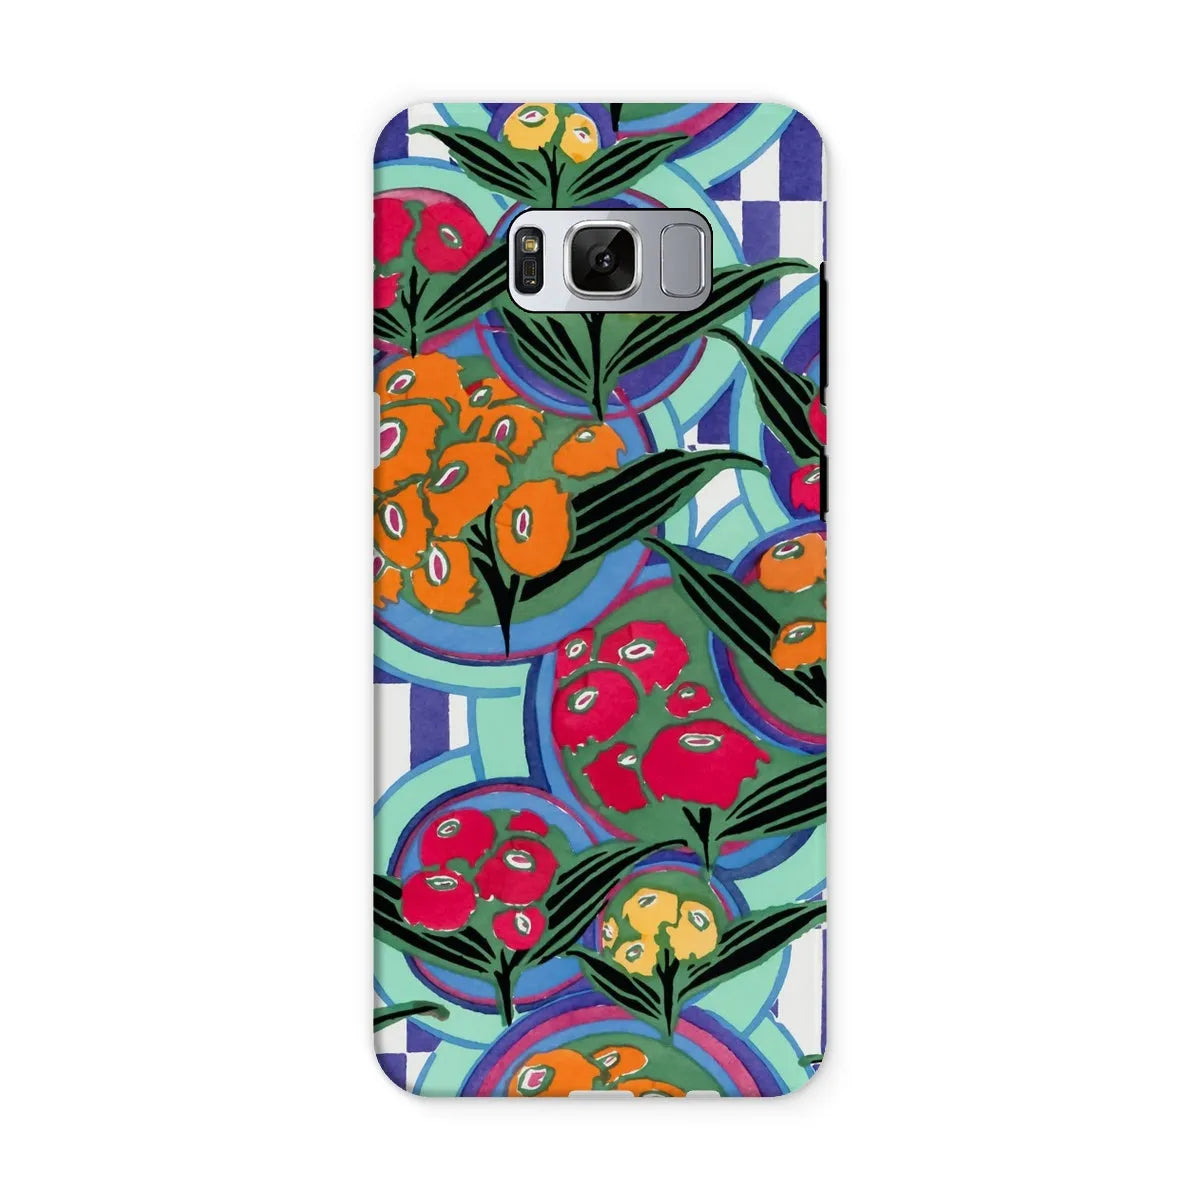 Vibrant Floral Aesthetic Art Phone Case - E.a. Séguy - Samsung Galaxy S8 / Matte - Mobile Phone Cases - Aesthetic Art